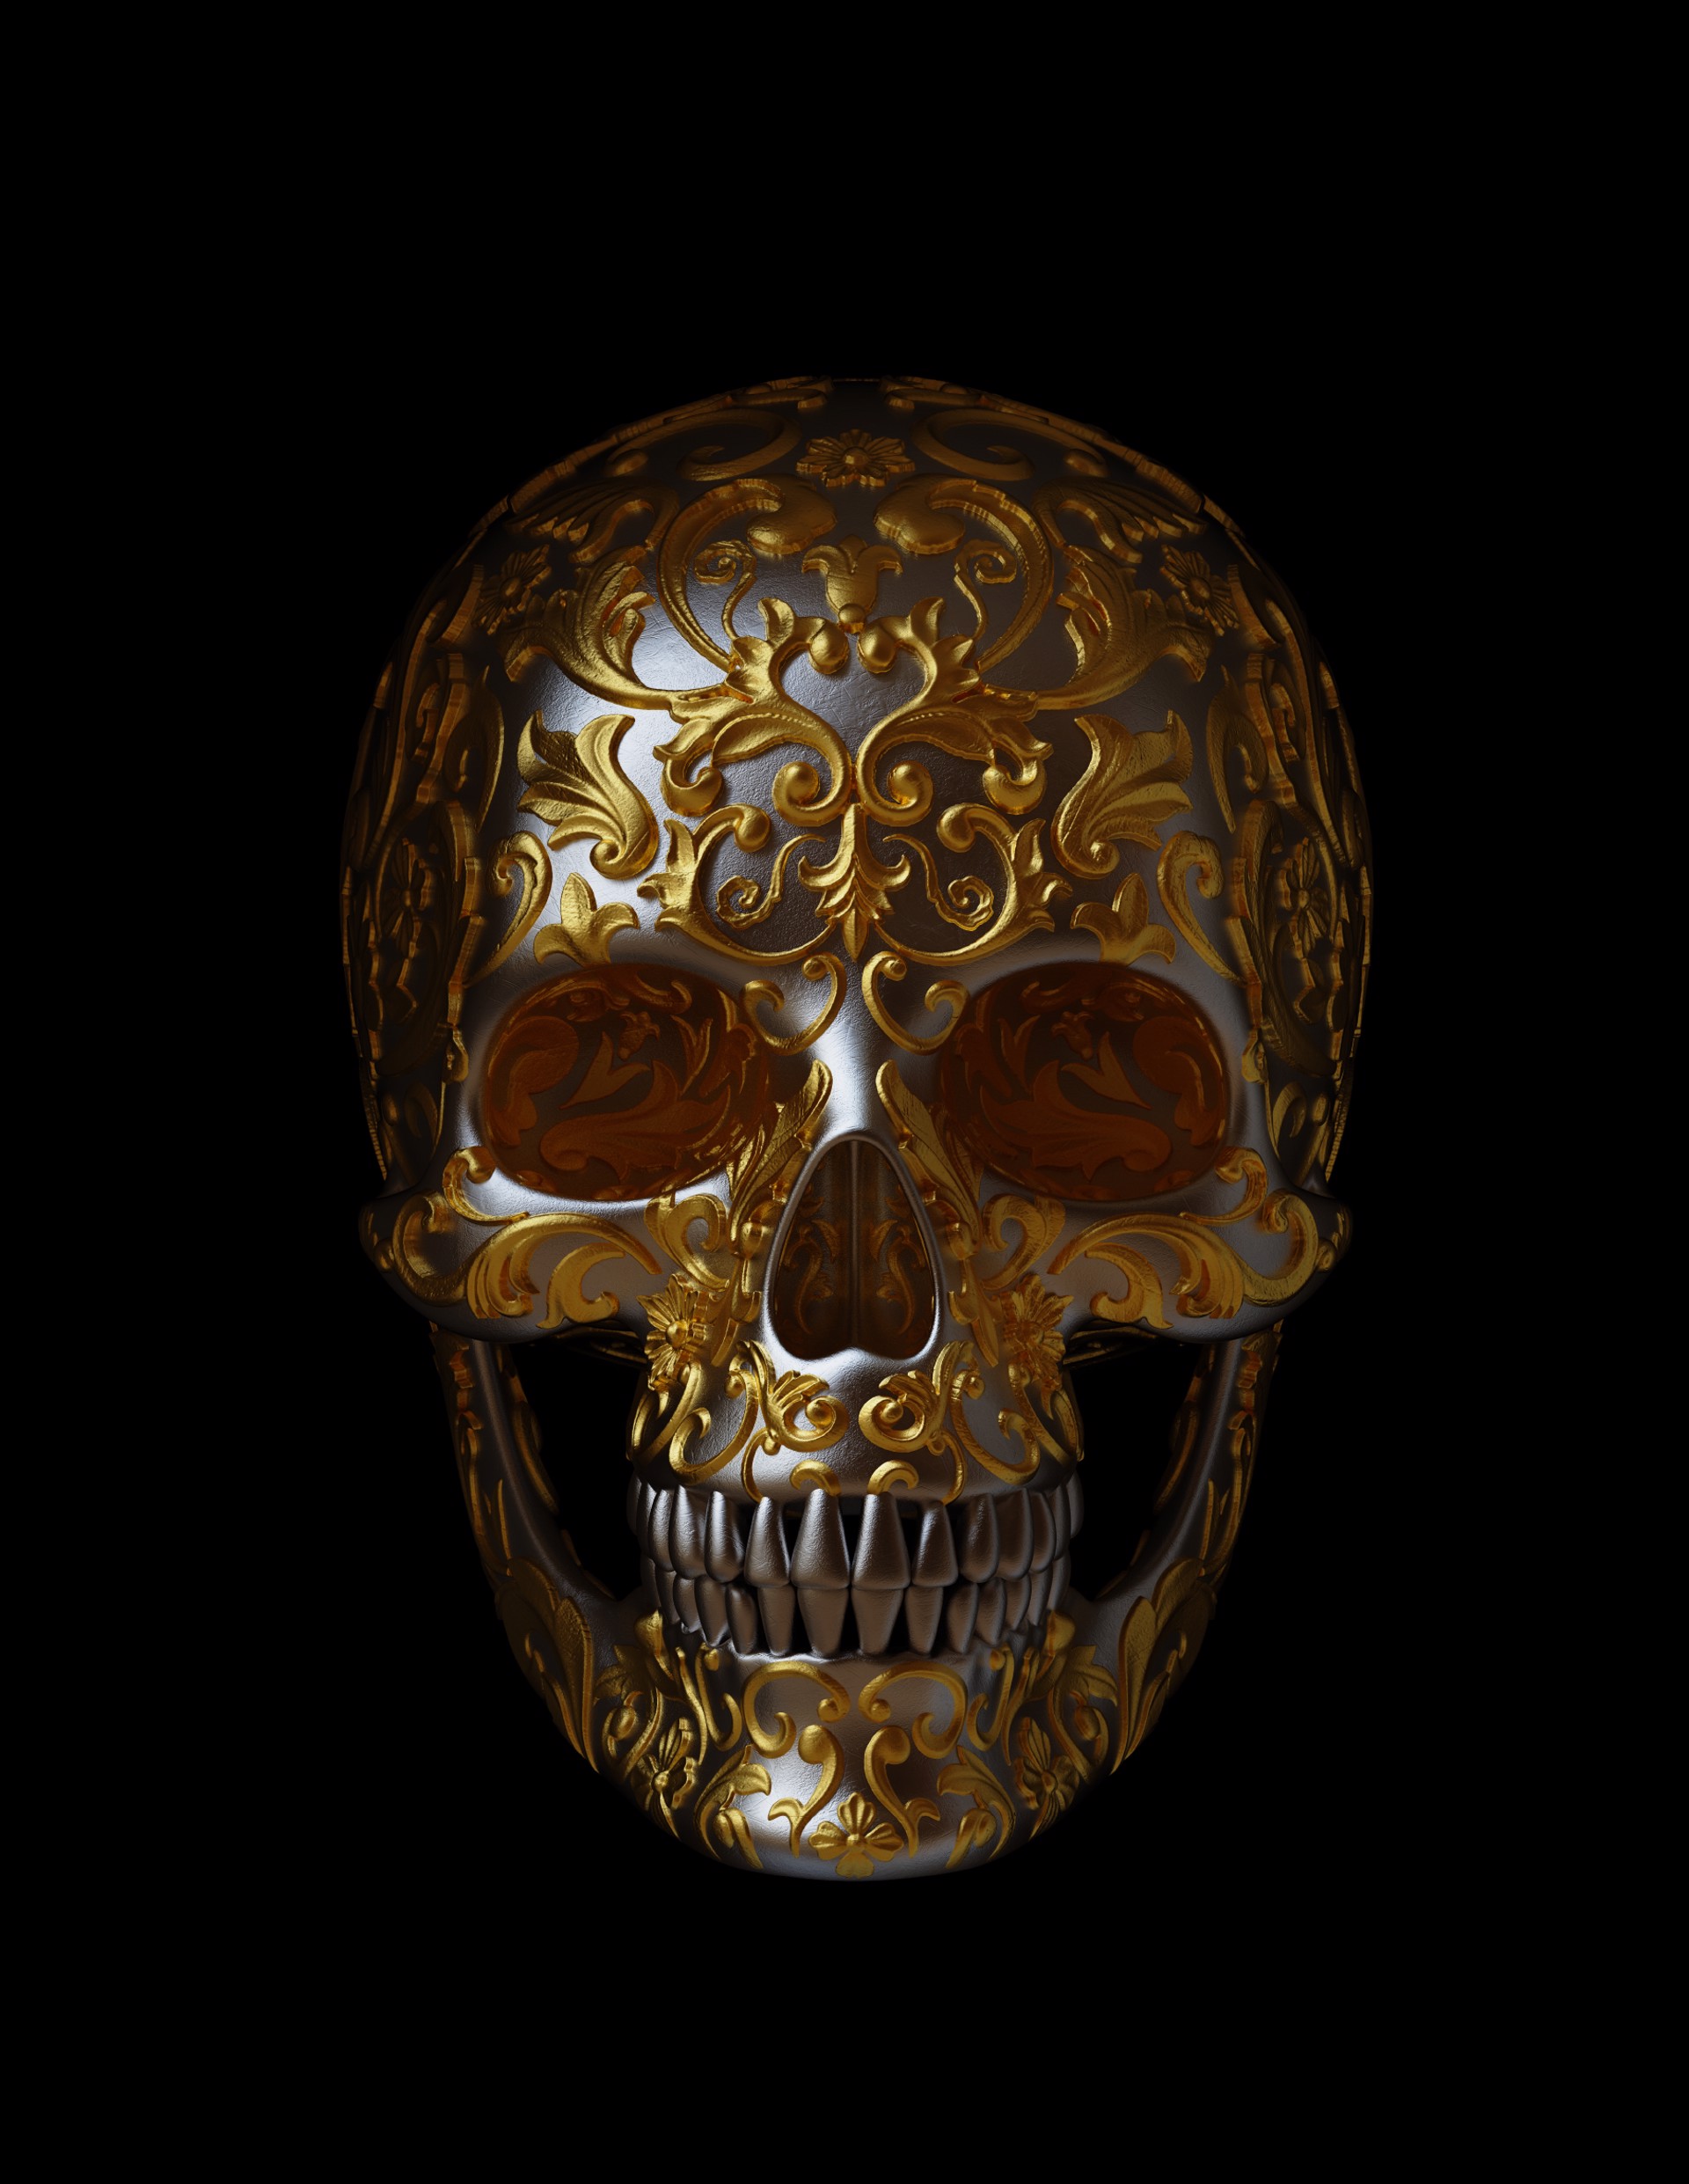 Gilded Skull by Gary James McQueen